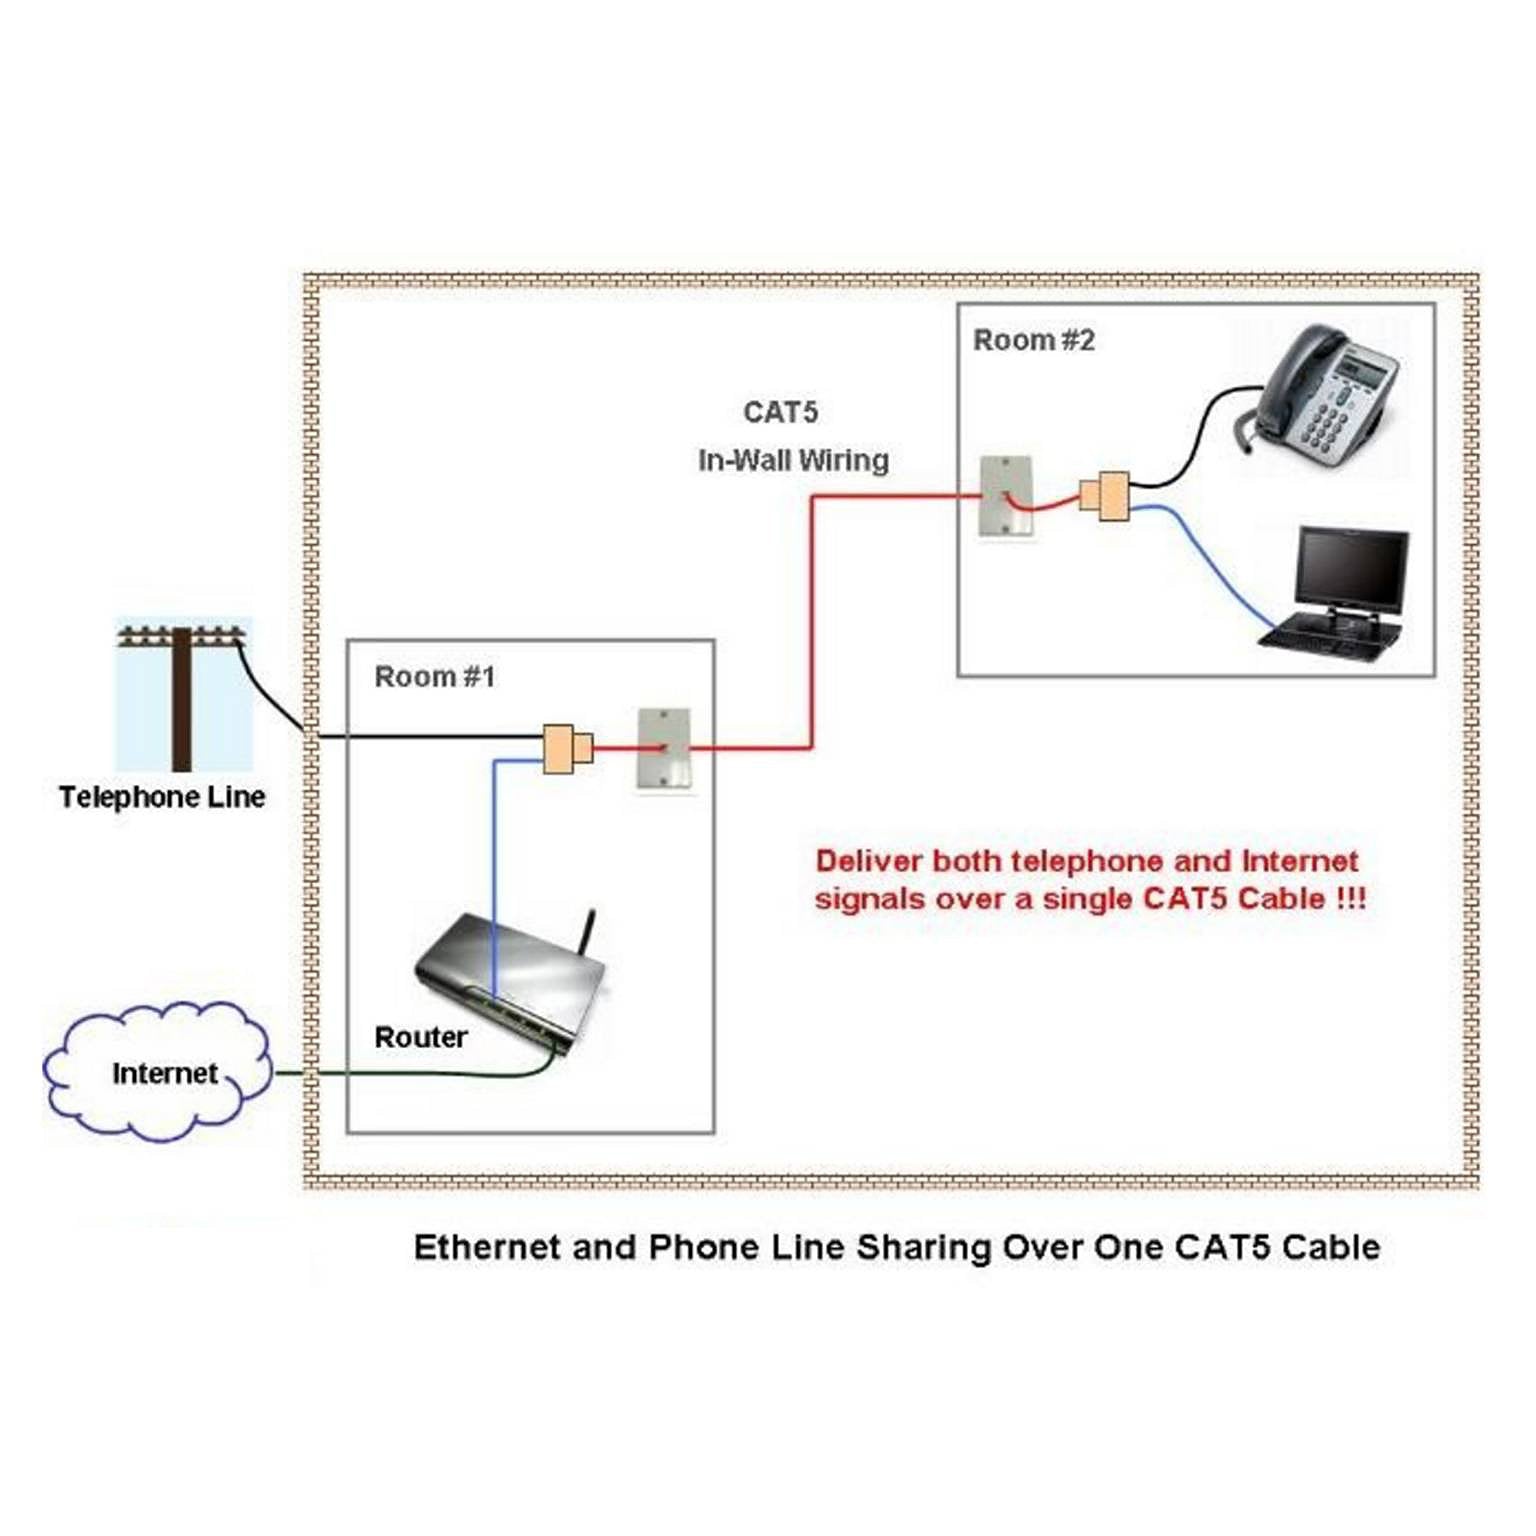 RJ45/RJ11 Splitter Cable Sharing Kit for Ethernet and Phone Lines – Dualcomm